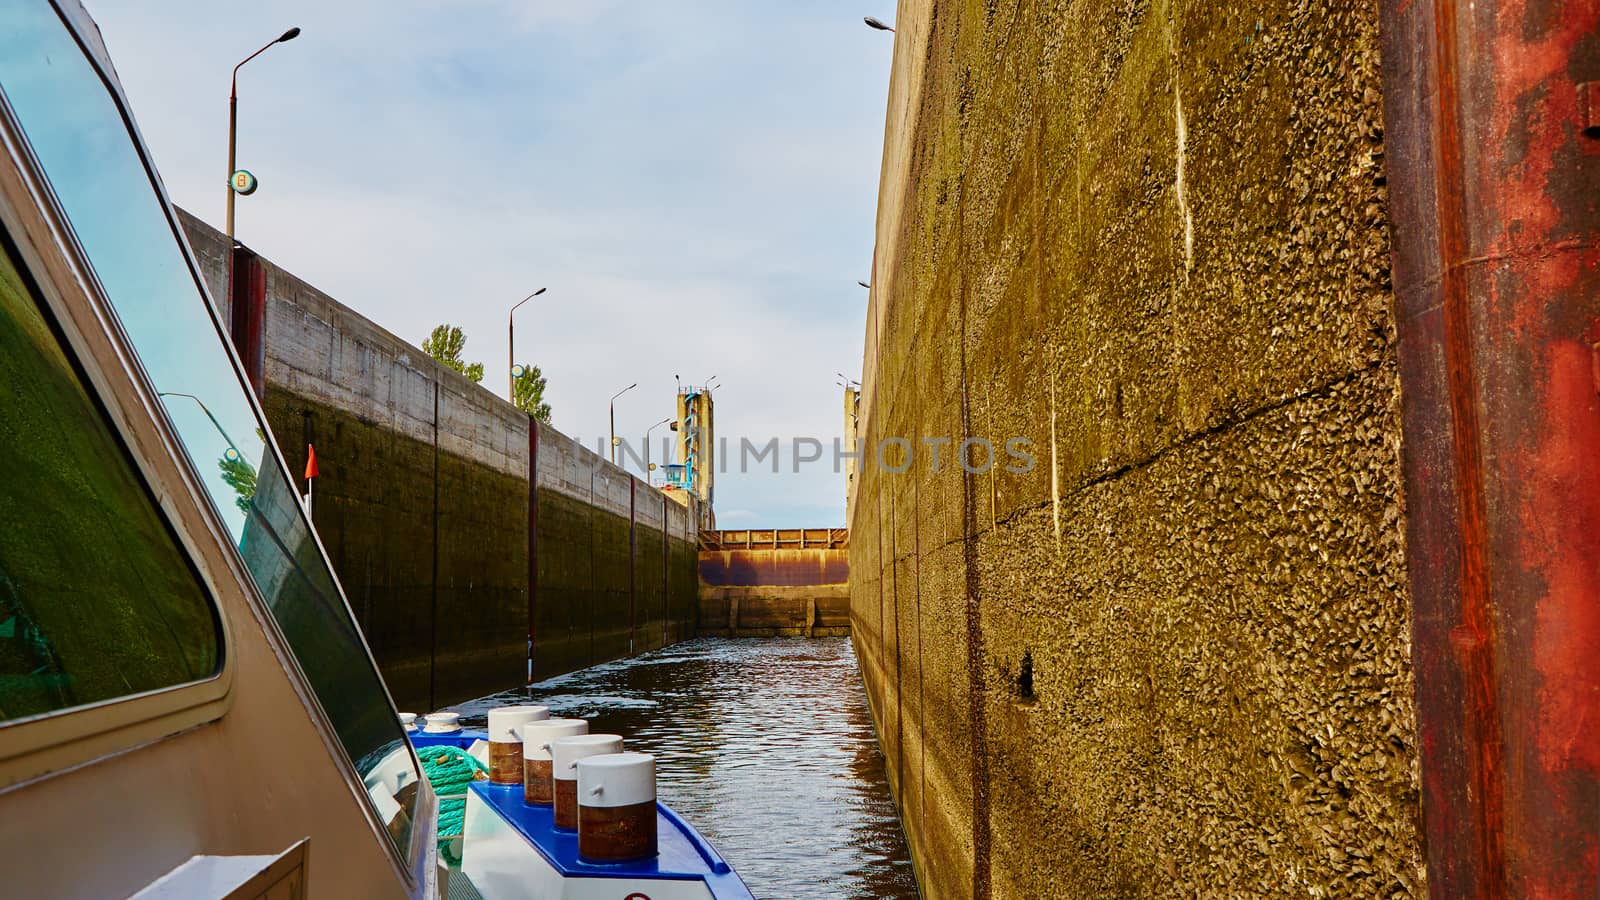 One of the locks on the navigable river Dnepr in Ukraine